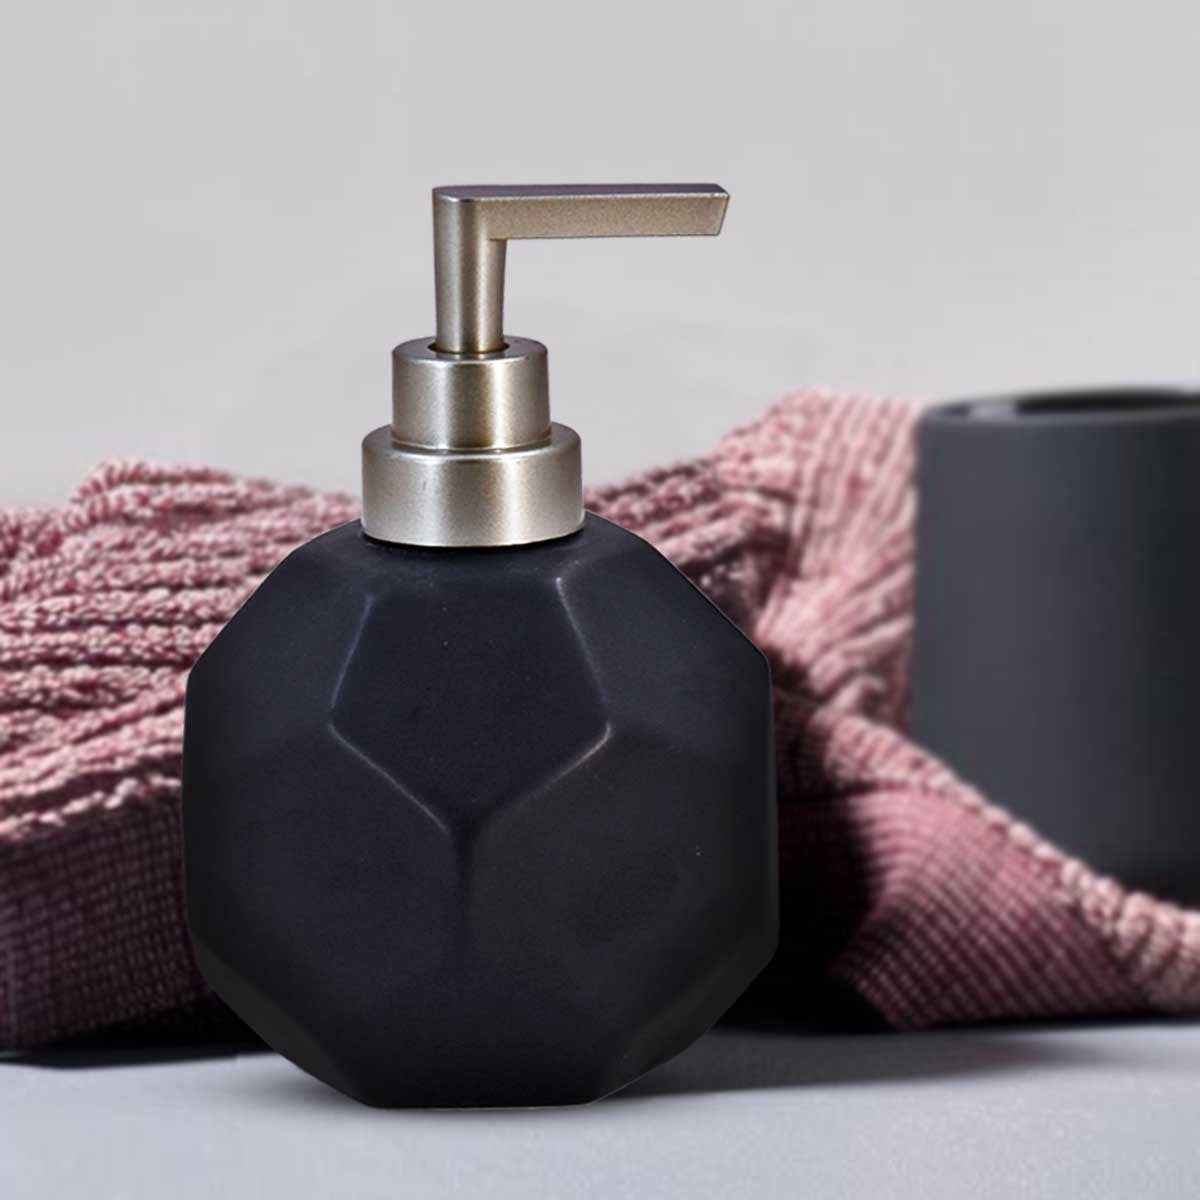 Ceramic Soap Dispenser handwash Pump for Bathroom, Set of 1, Black (8021)